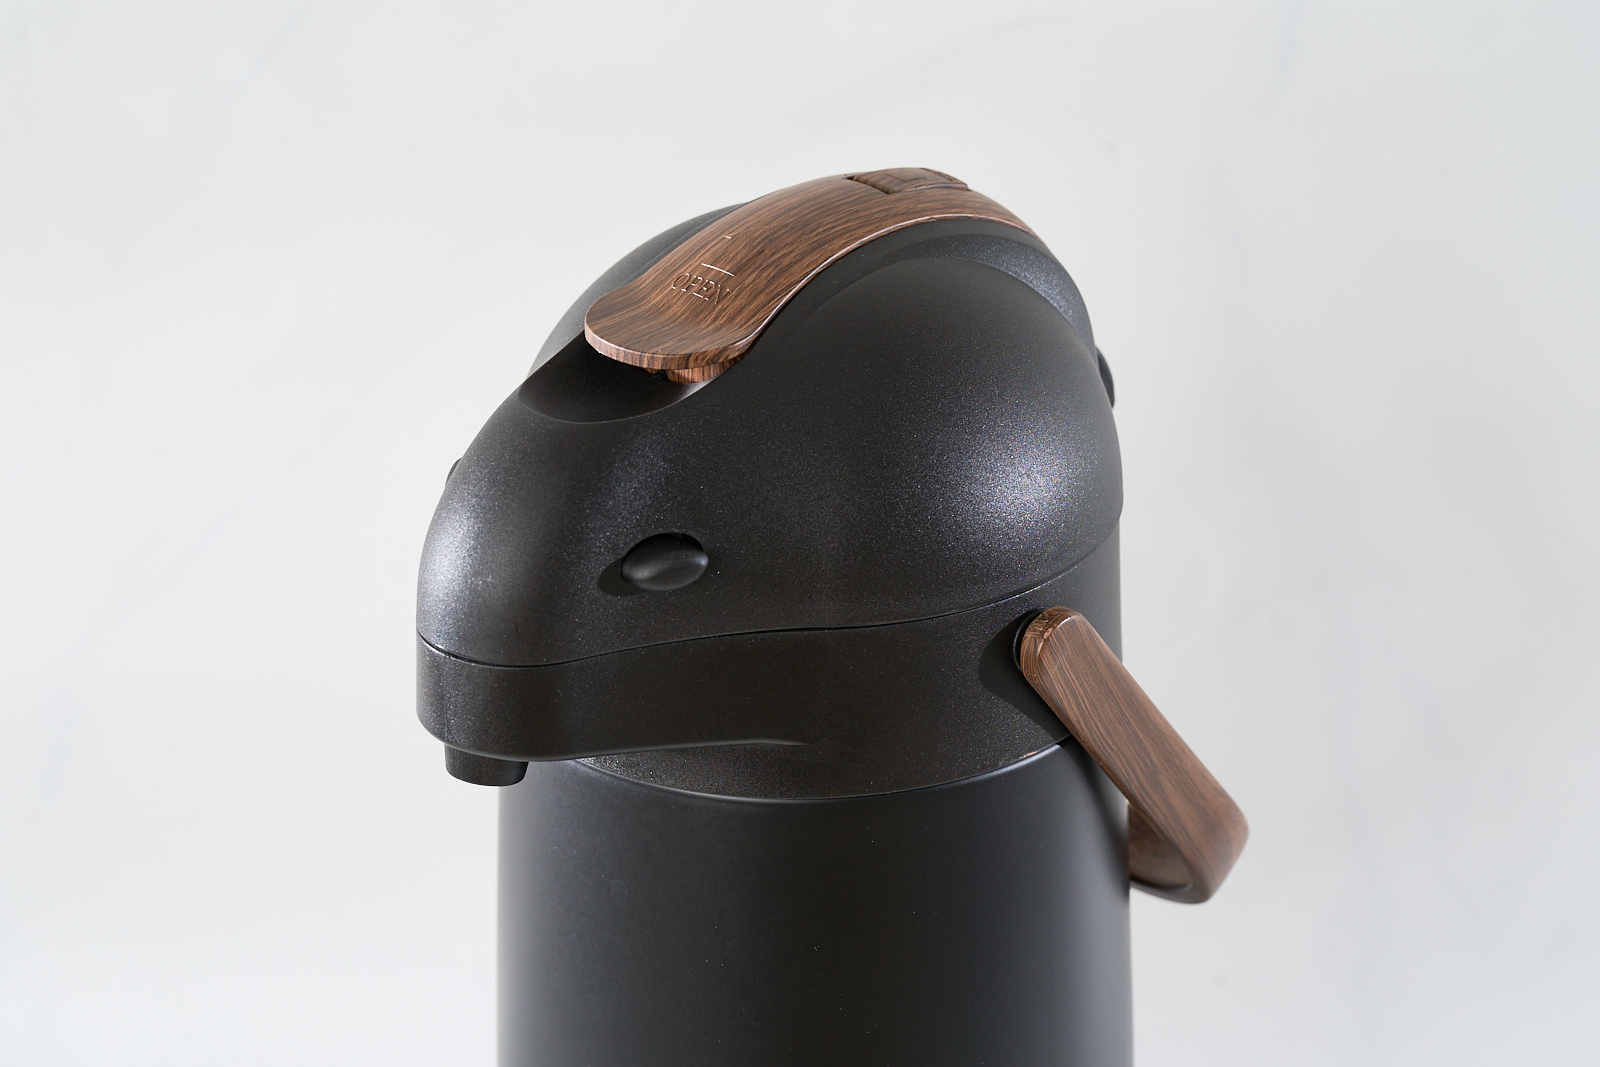 DSC06065 - Amazon hot sale wooden airpot coffee dispenser with pump 3 liter